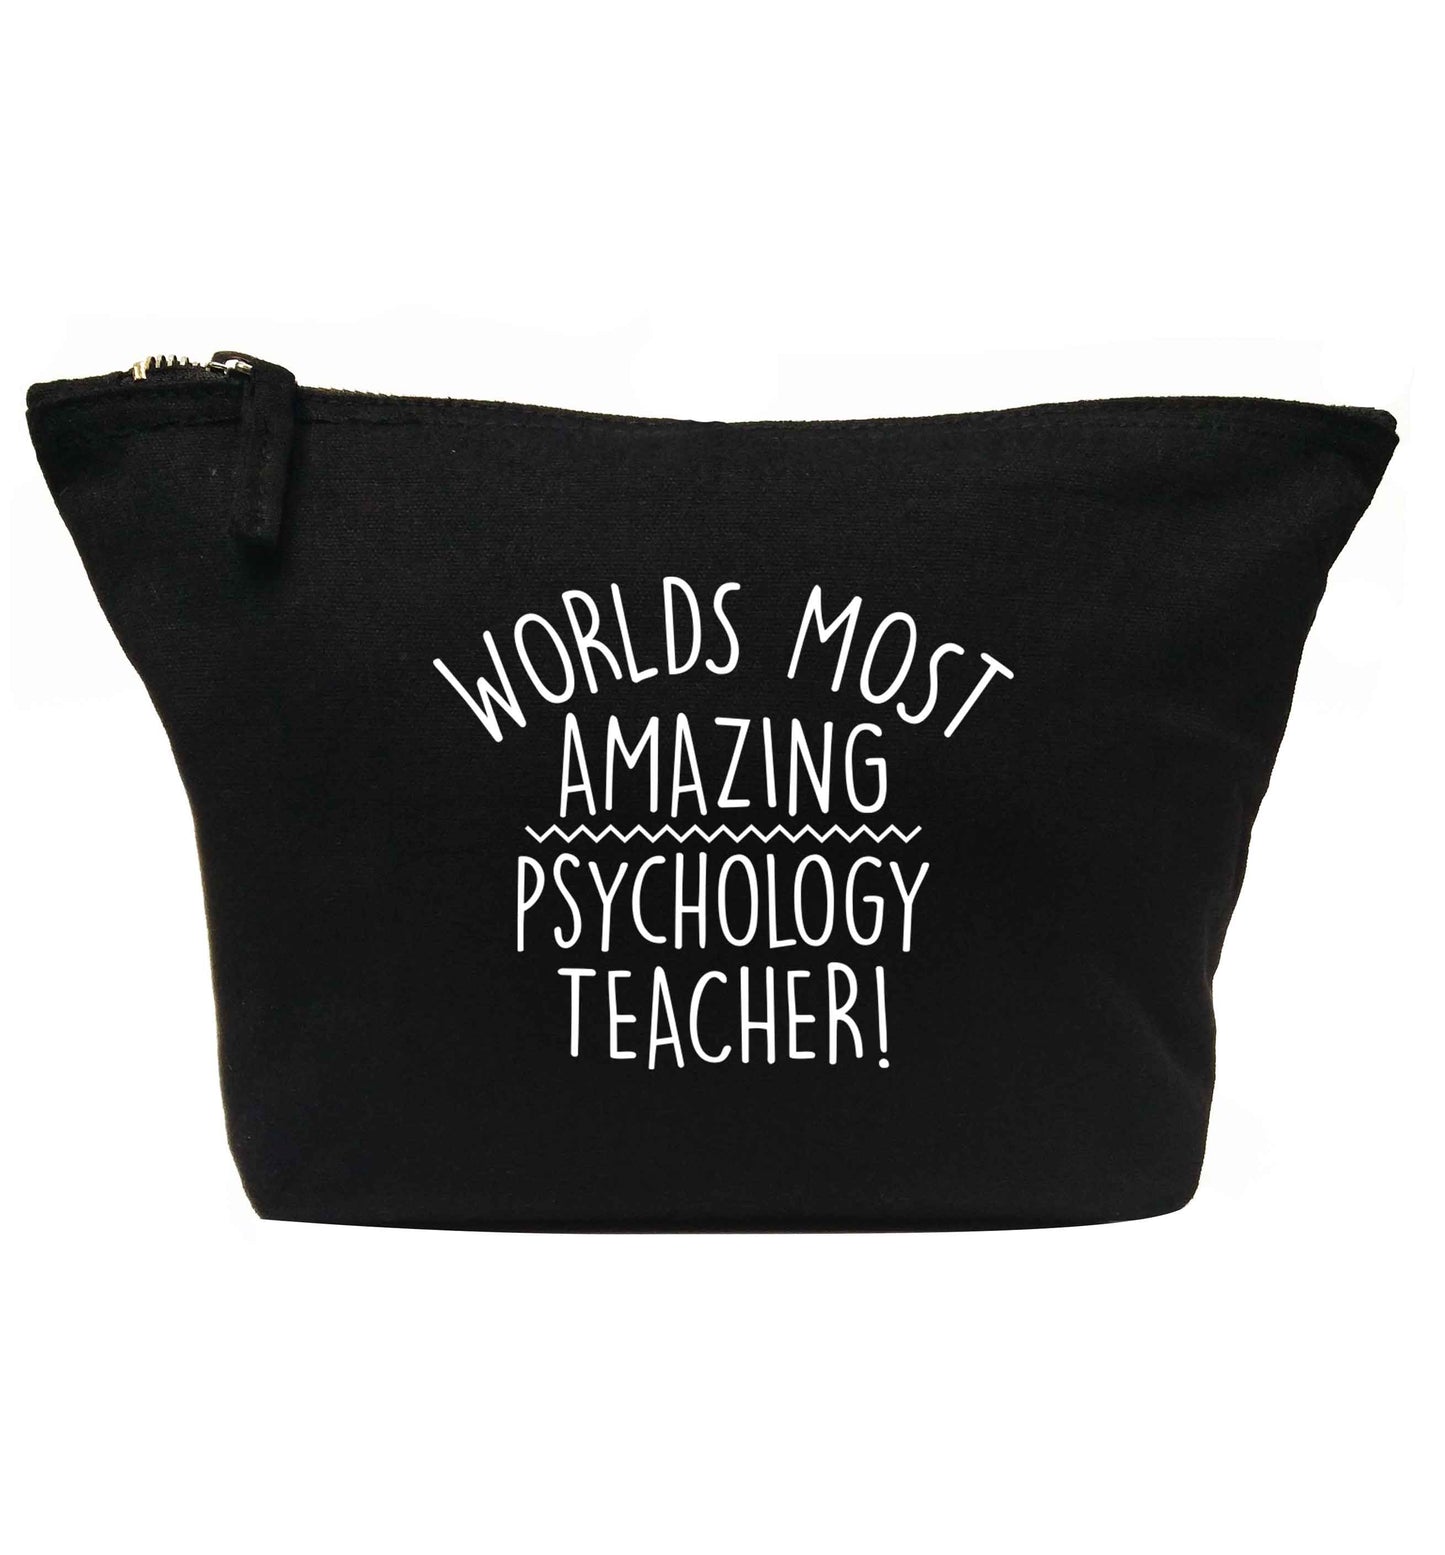 Worlds most amazing psychology teacher | Makeup / wash bag